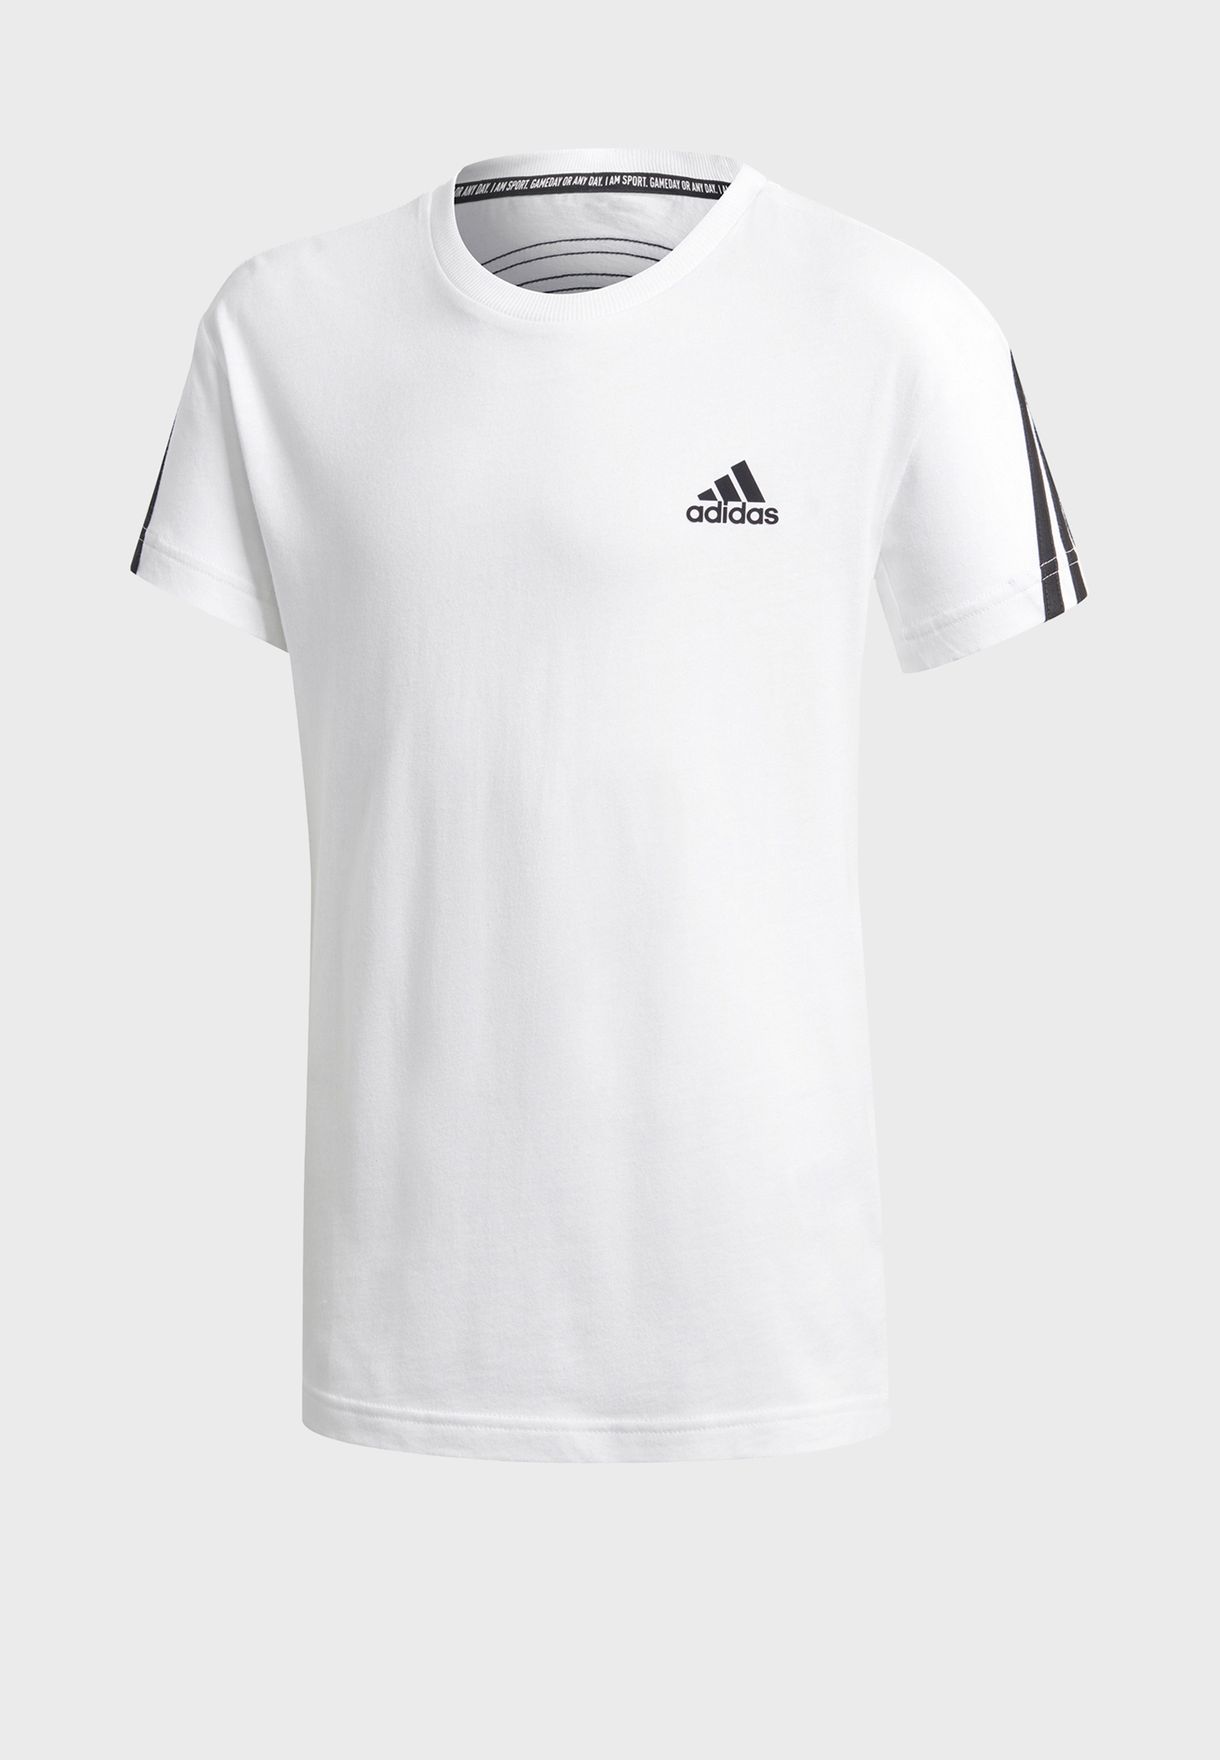 adidas white t shirt